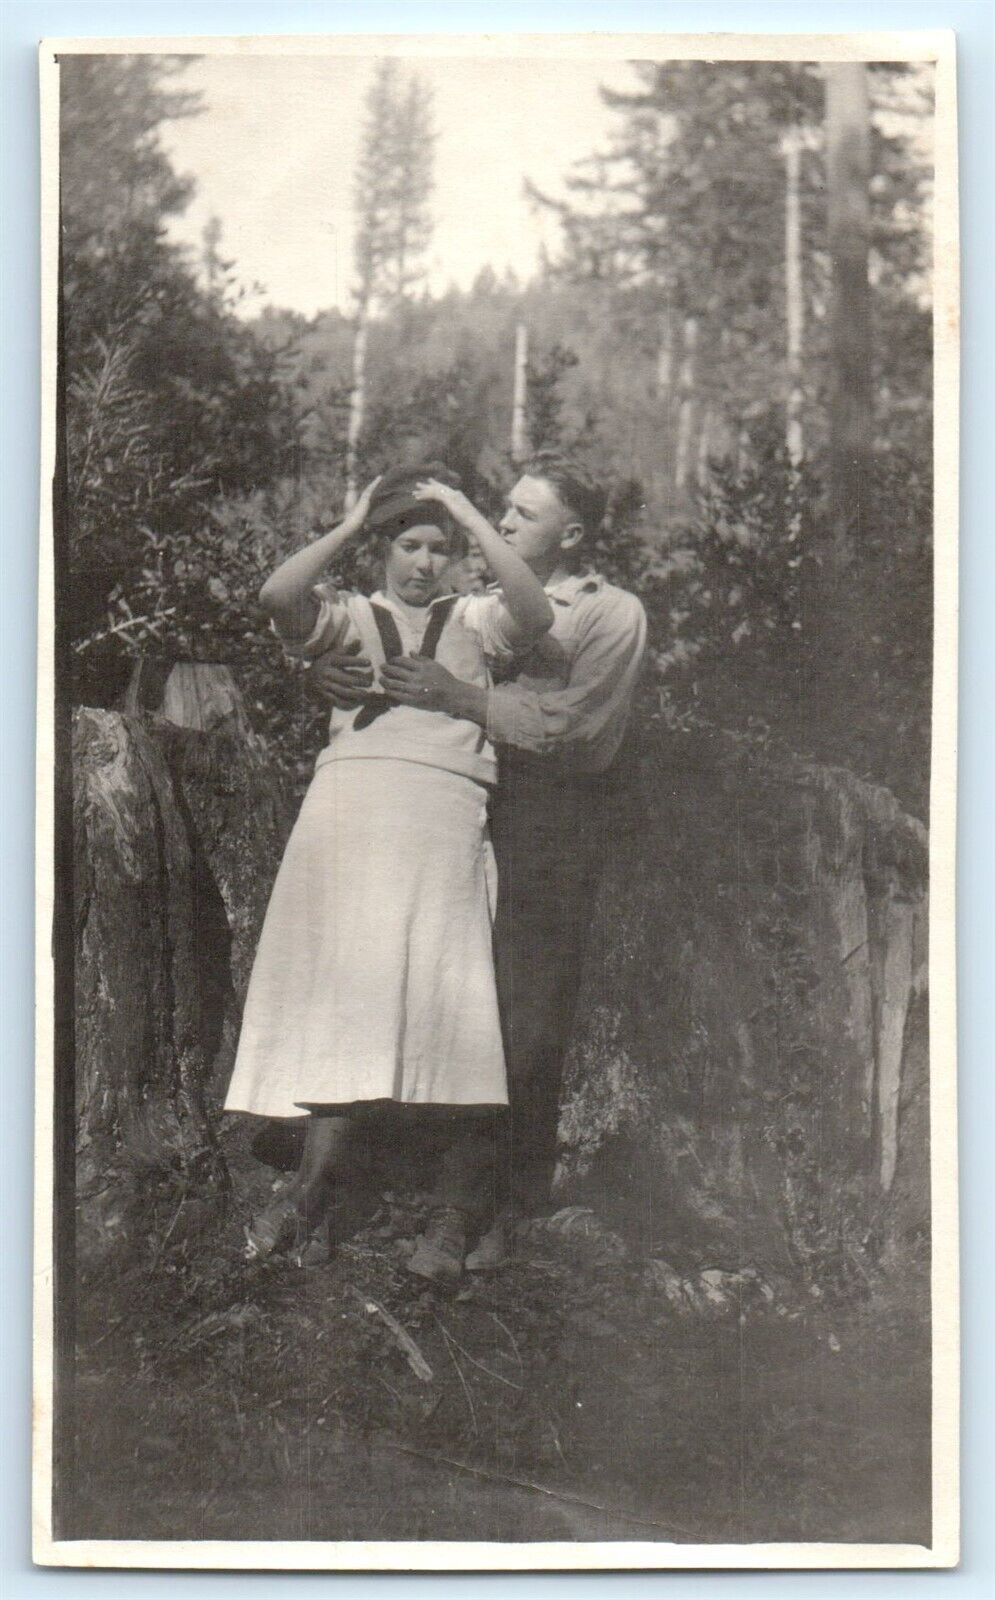 1930's Risque Heavy Petting Thyra & Bob in Bushes Getting Handsy VTG Photo QQ